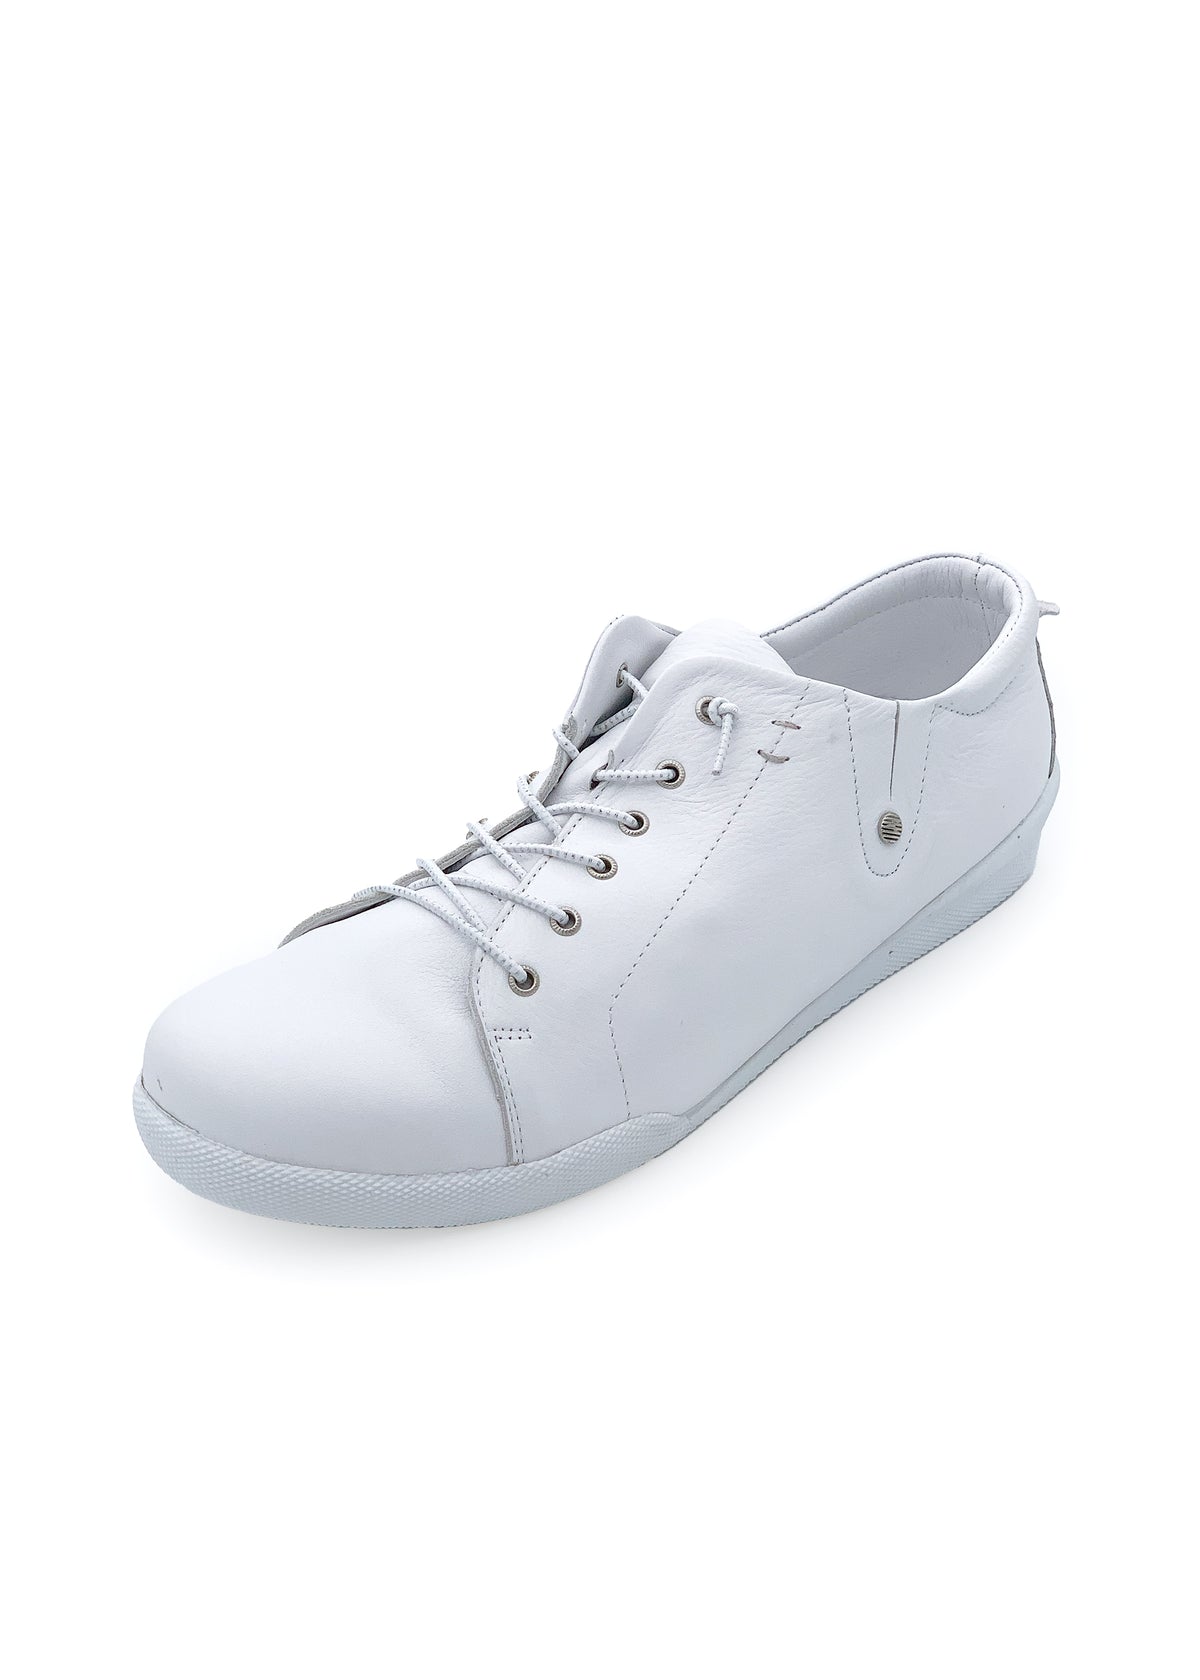 Låga sneakers - vita, elastiska remmar